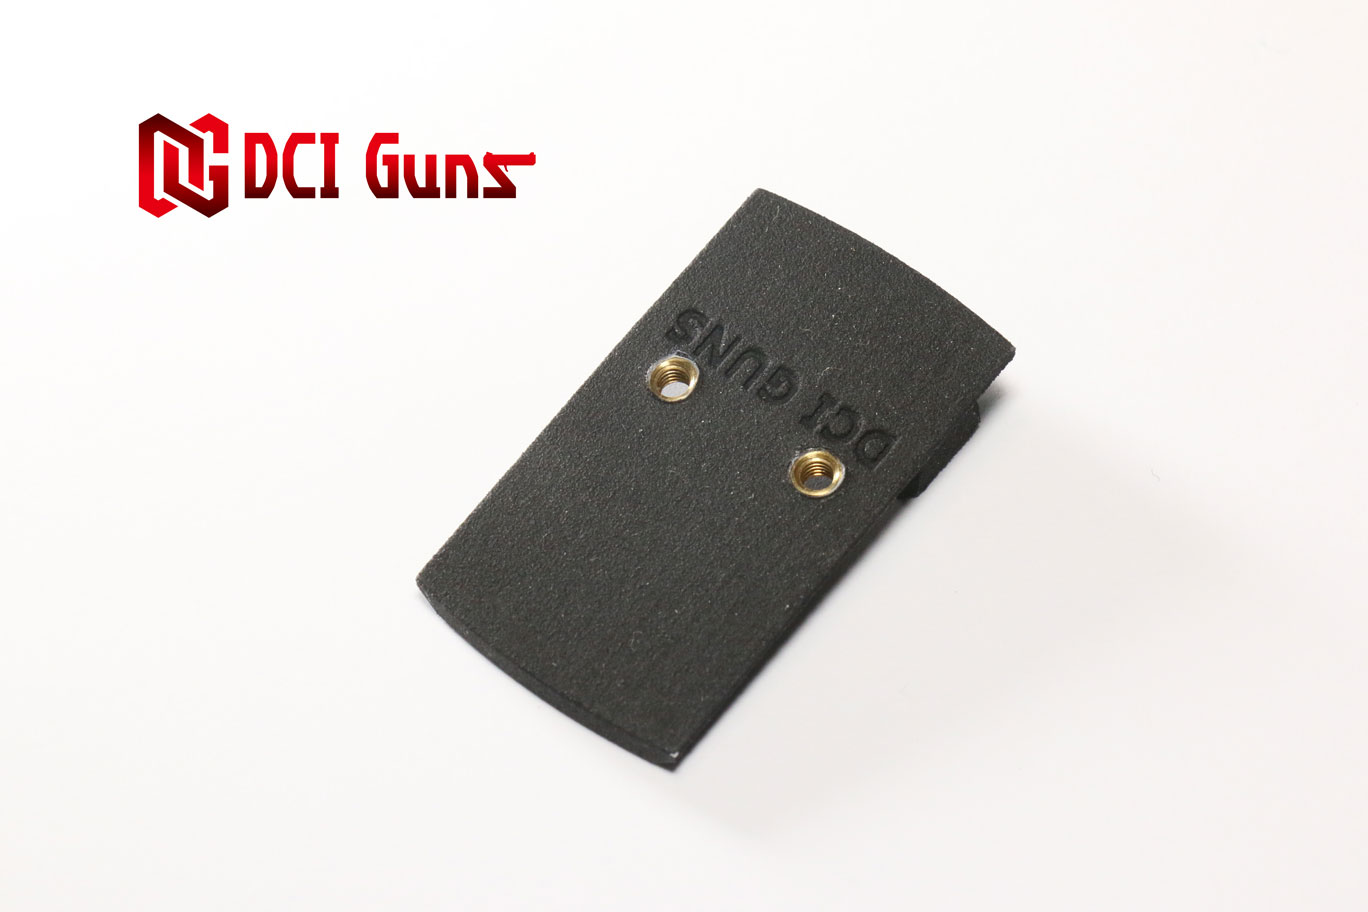 DCI Guns 東京マルイ USP GBB 用ドクターサイトマウントV2.0 エアガン エアーガン ガスガン ブローバック カスタムパーツ ダットサイト ドットサイト 光学機器 スライド 直付け サバゲー サバイバルゲーム マイクロプロサイト